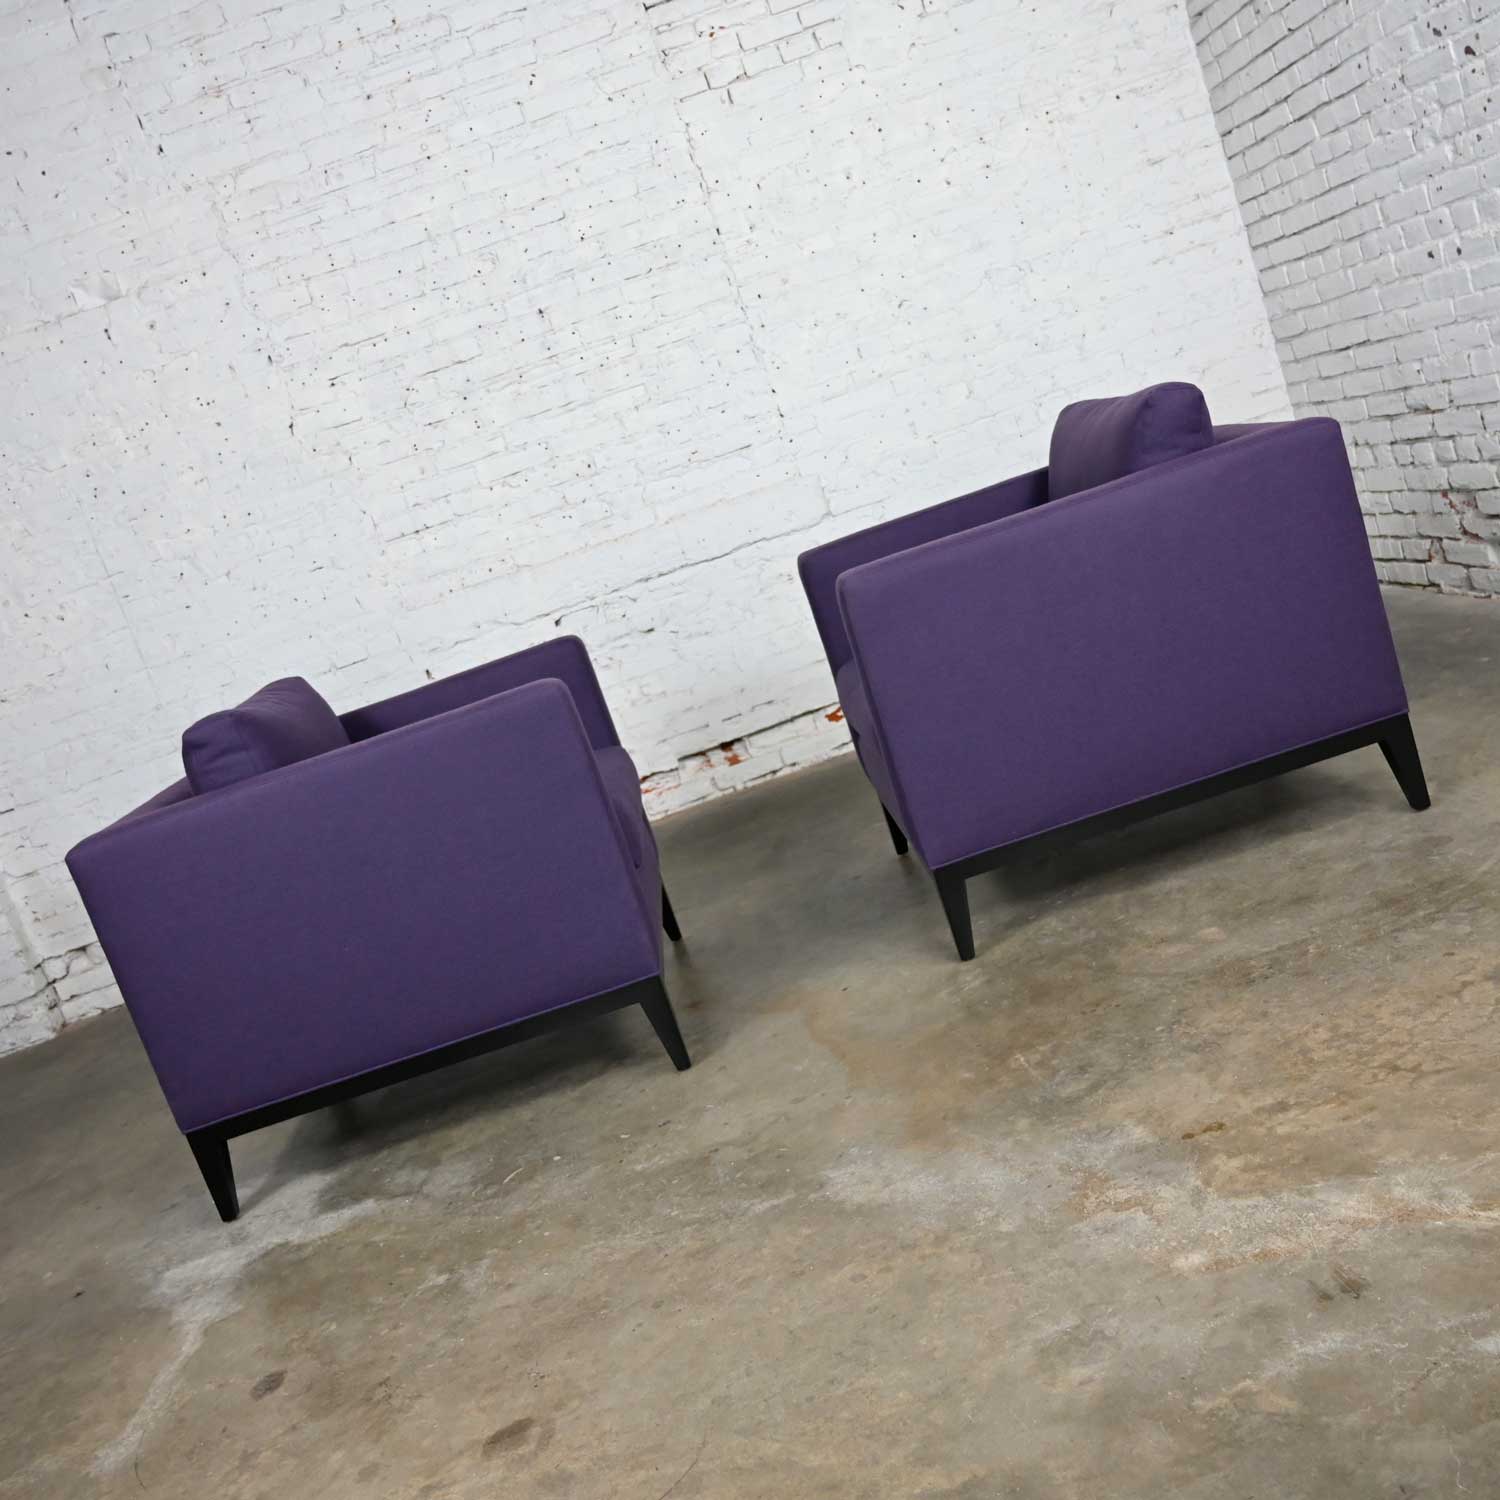 Modern Purple Plum Tone Tuxedo Style Club Chairs by Baker a Pair